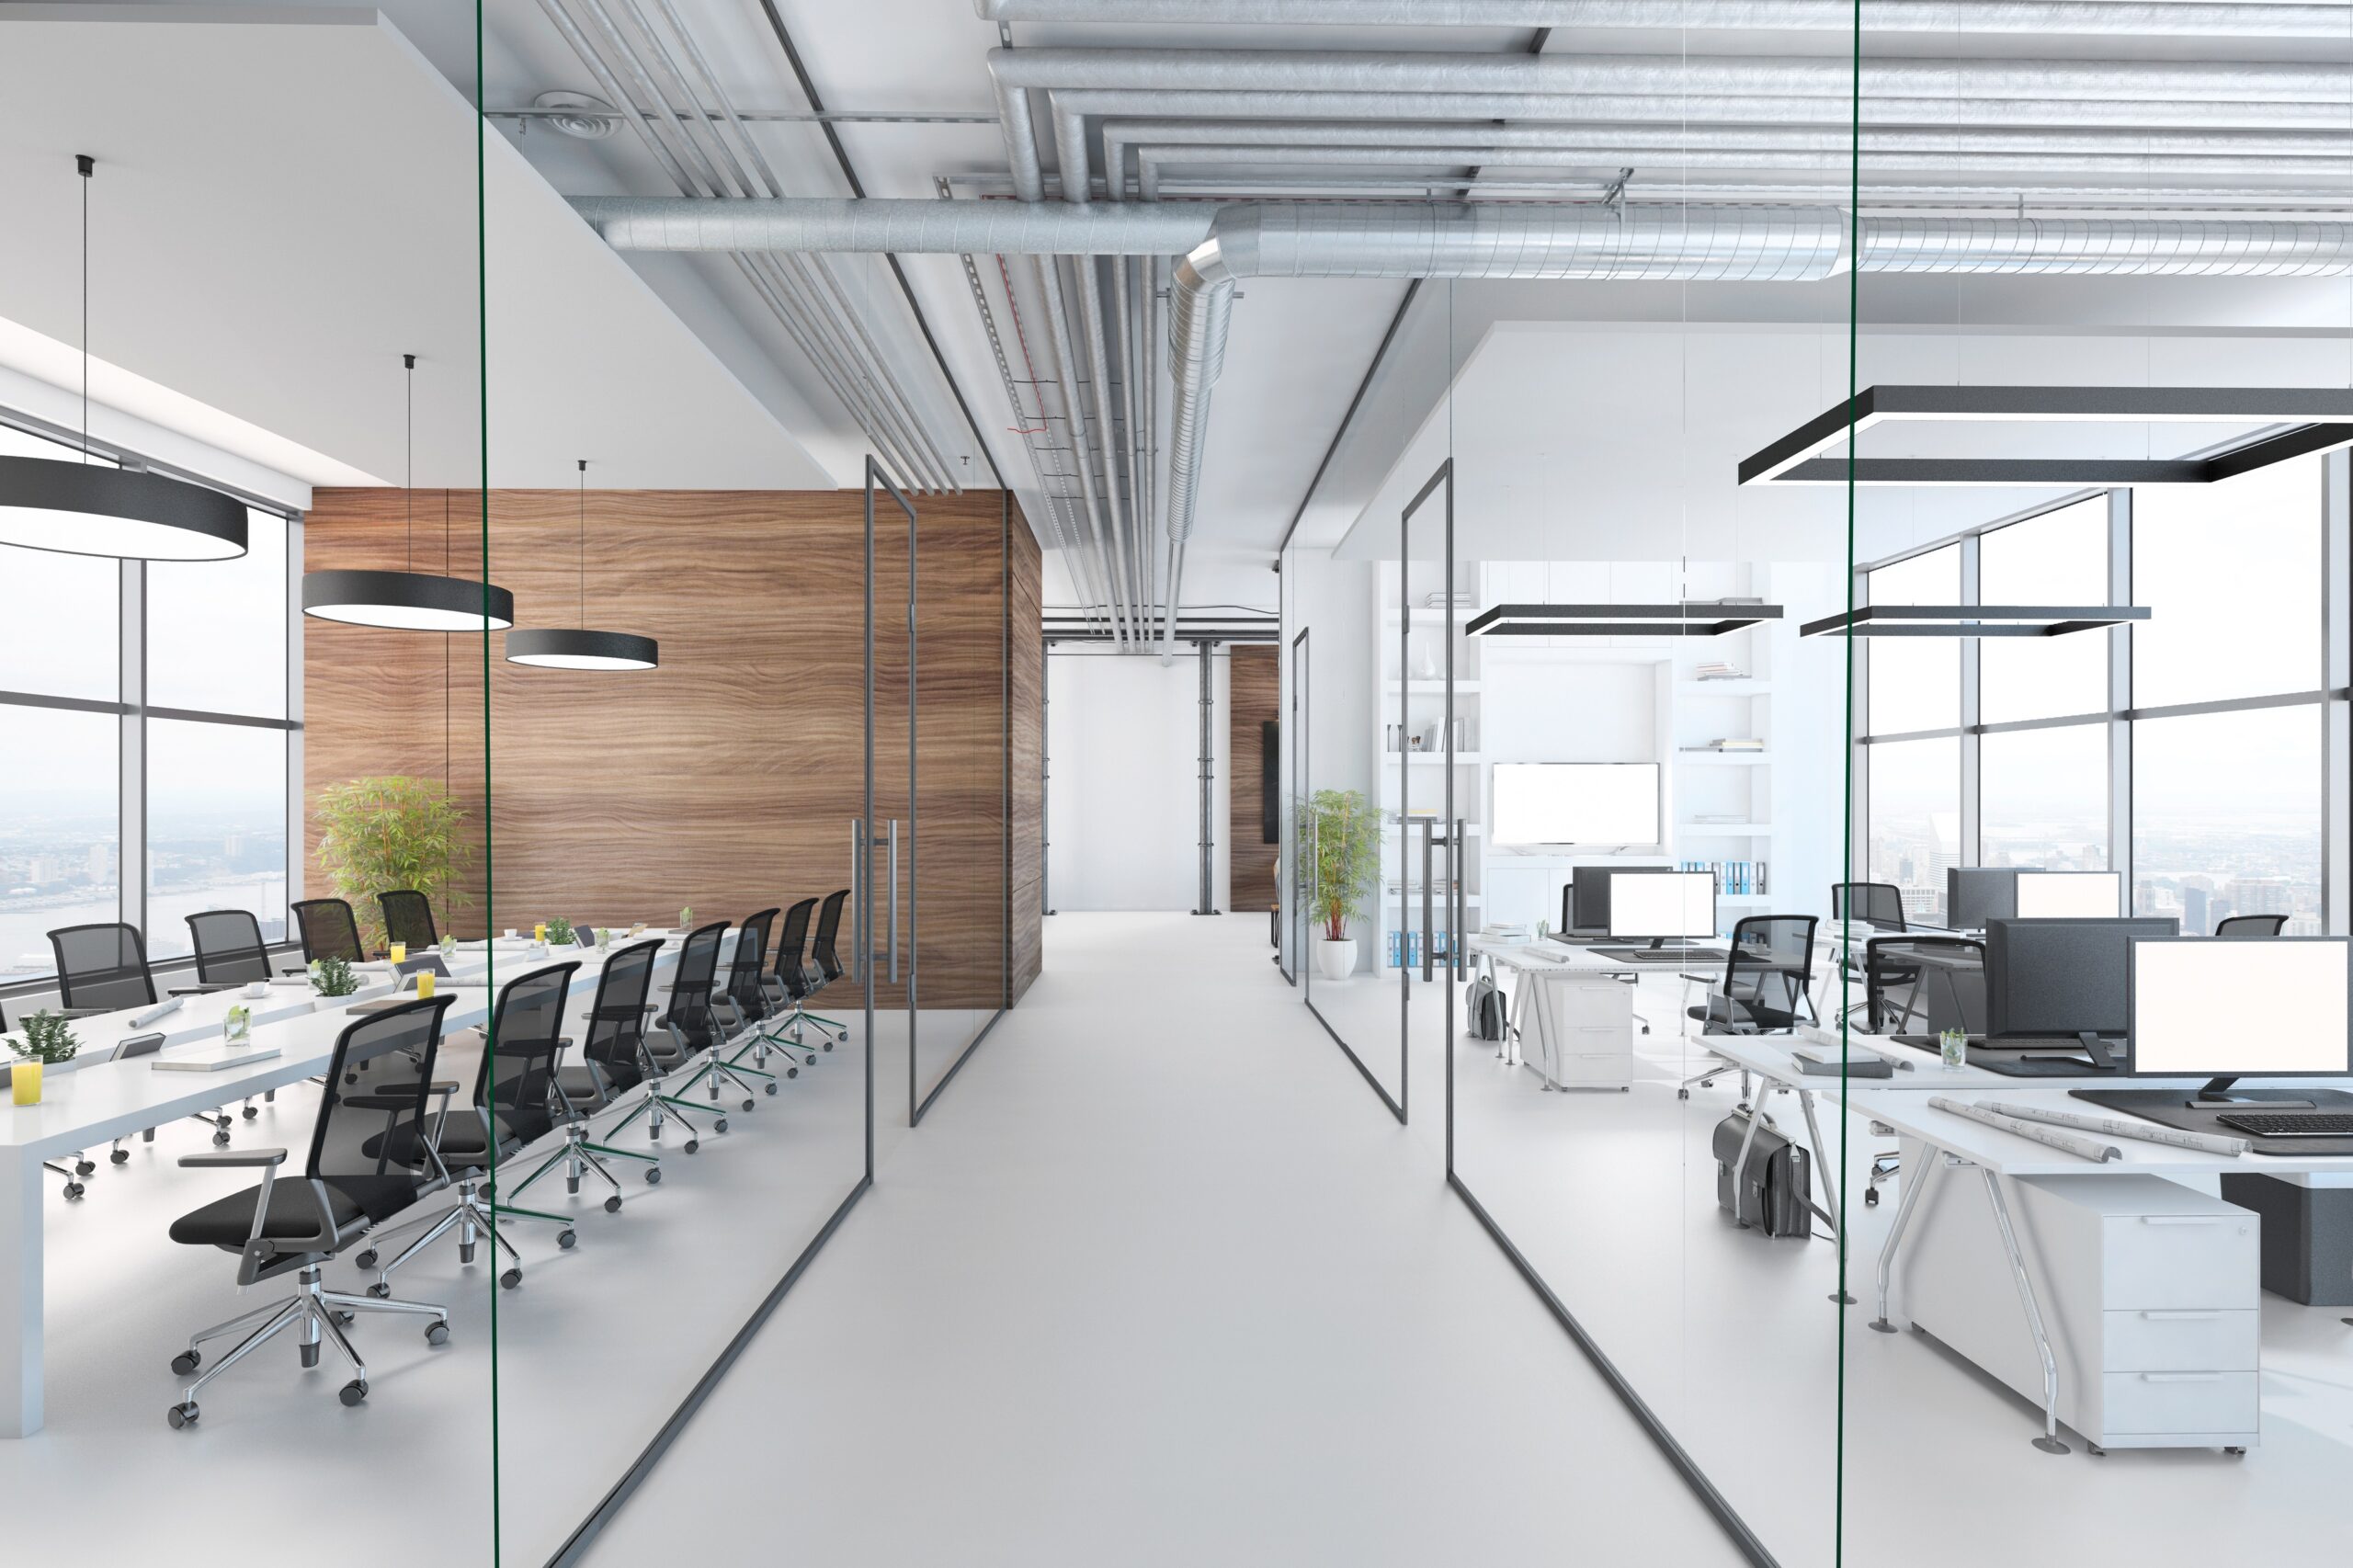 Modern Industrial Office Interior Design